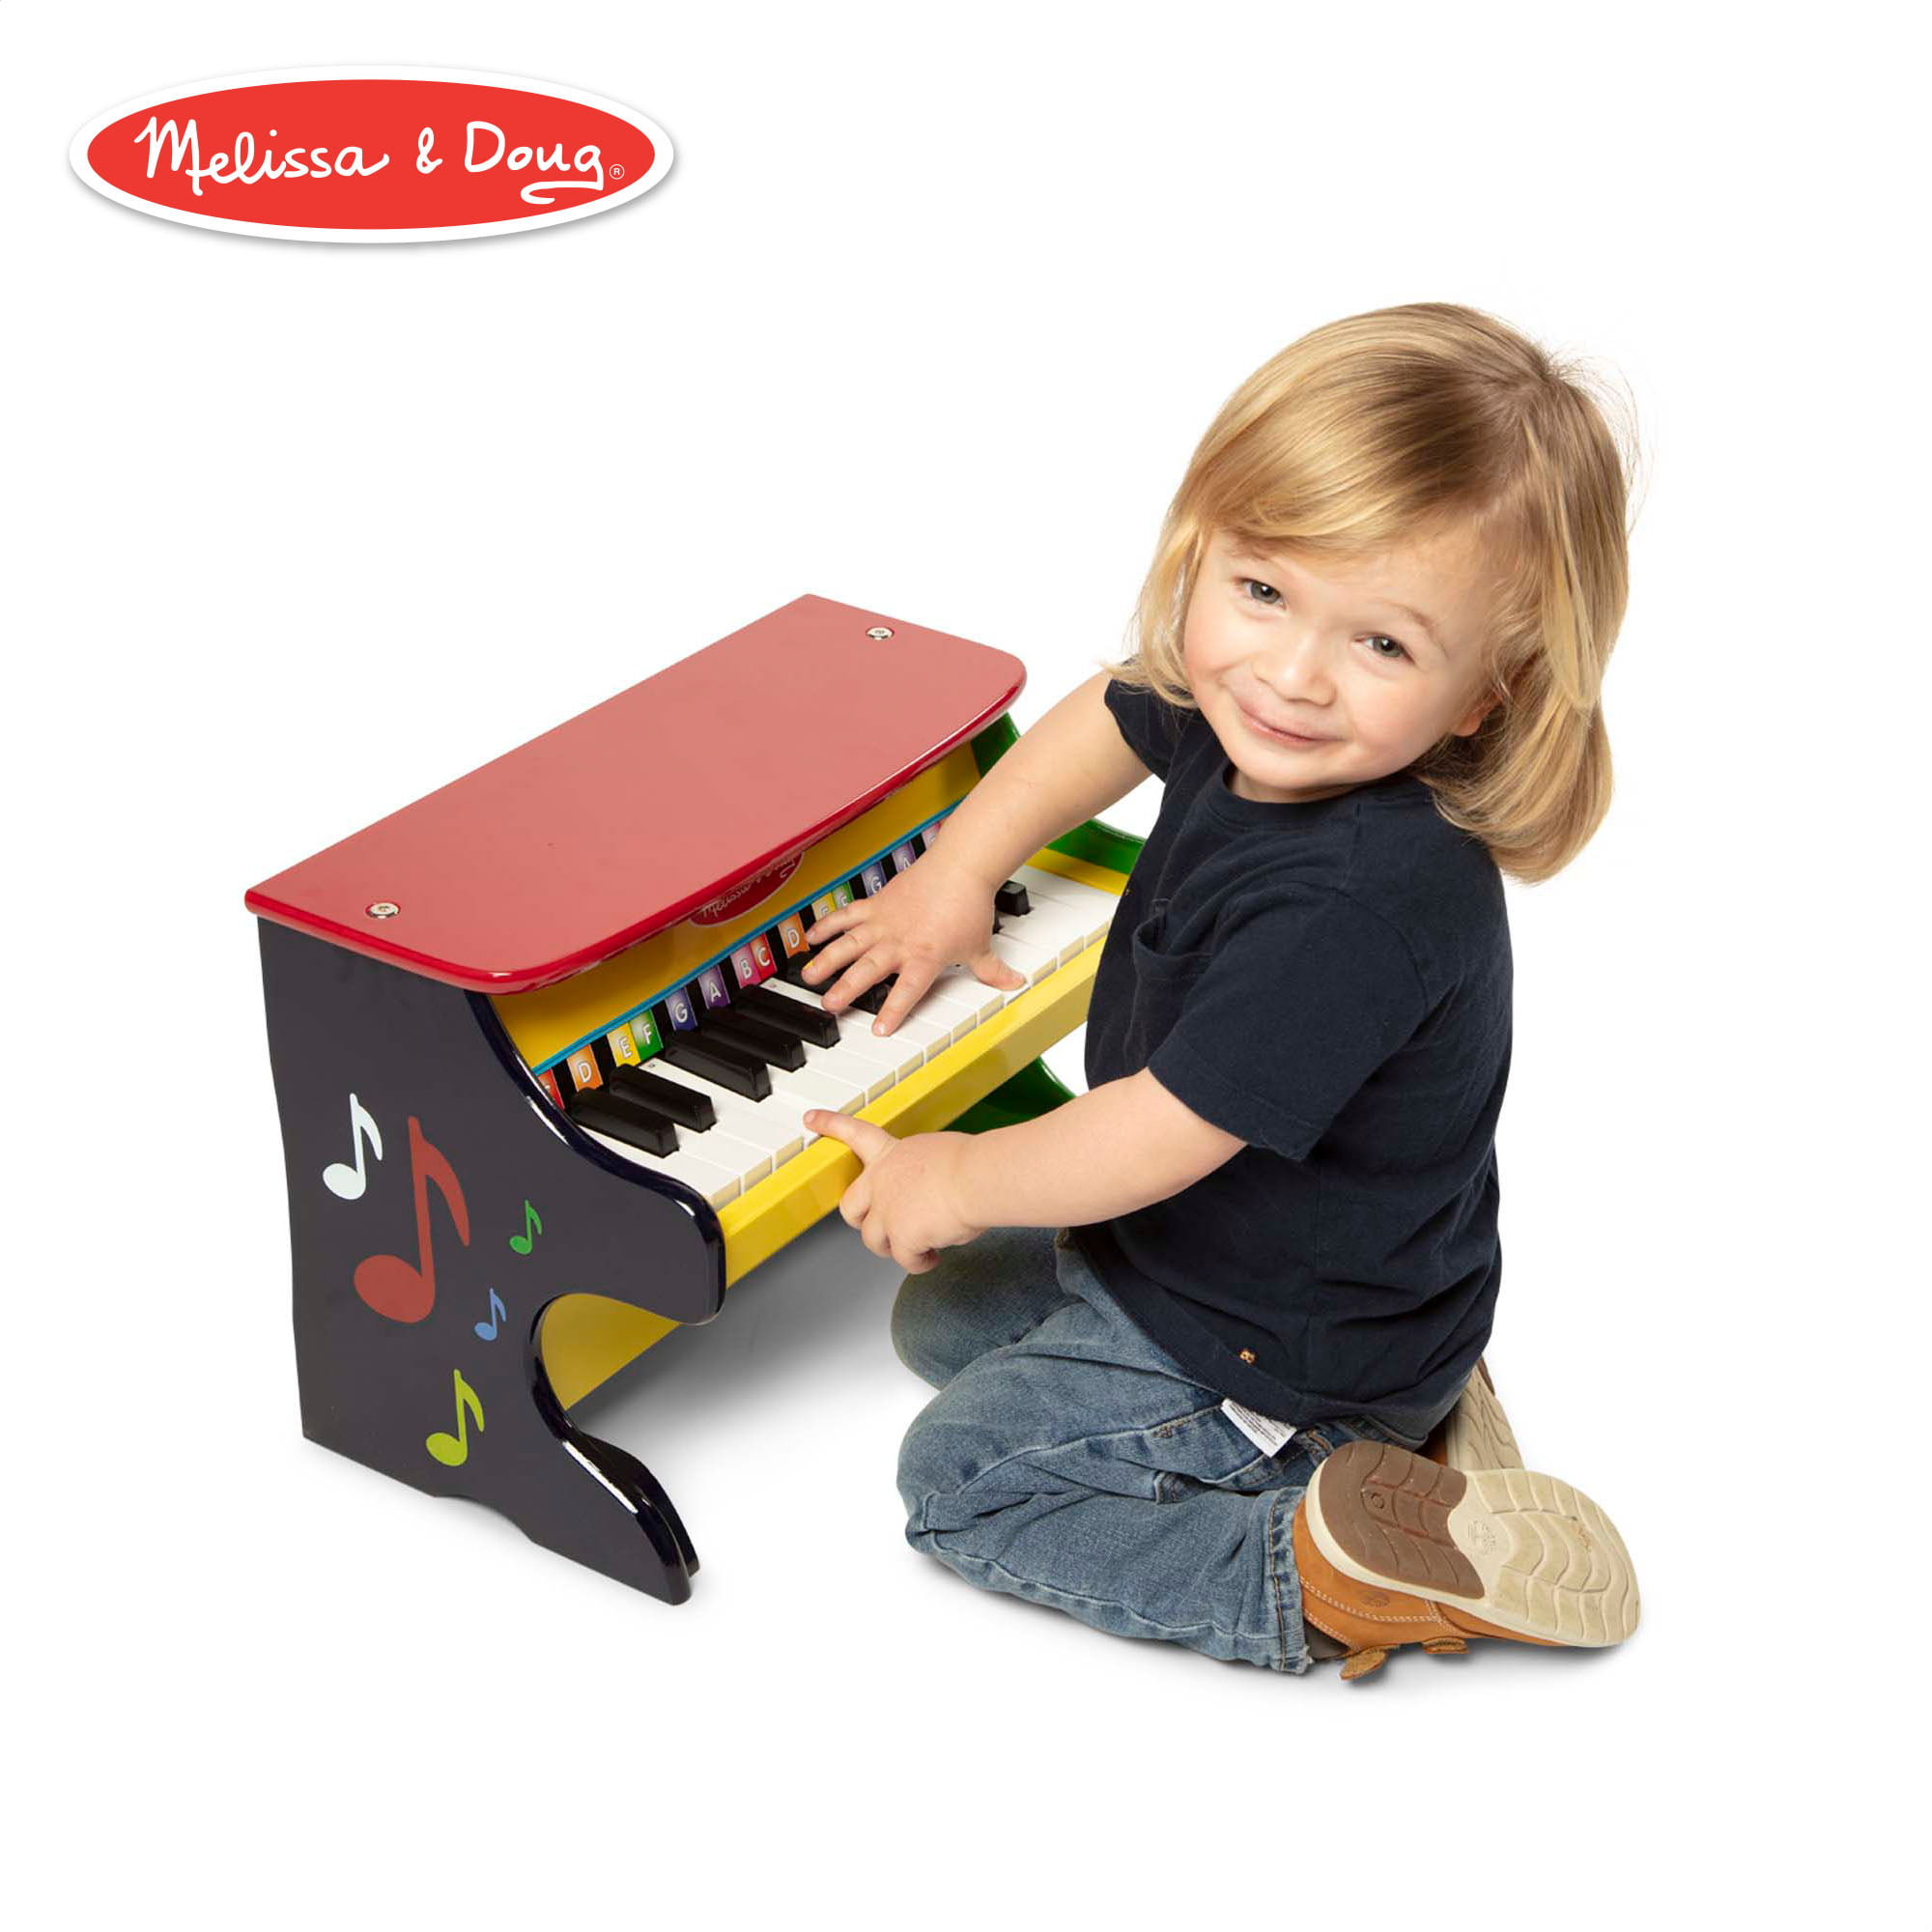 melissa and doug children's piano